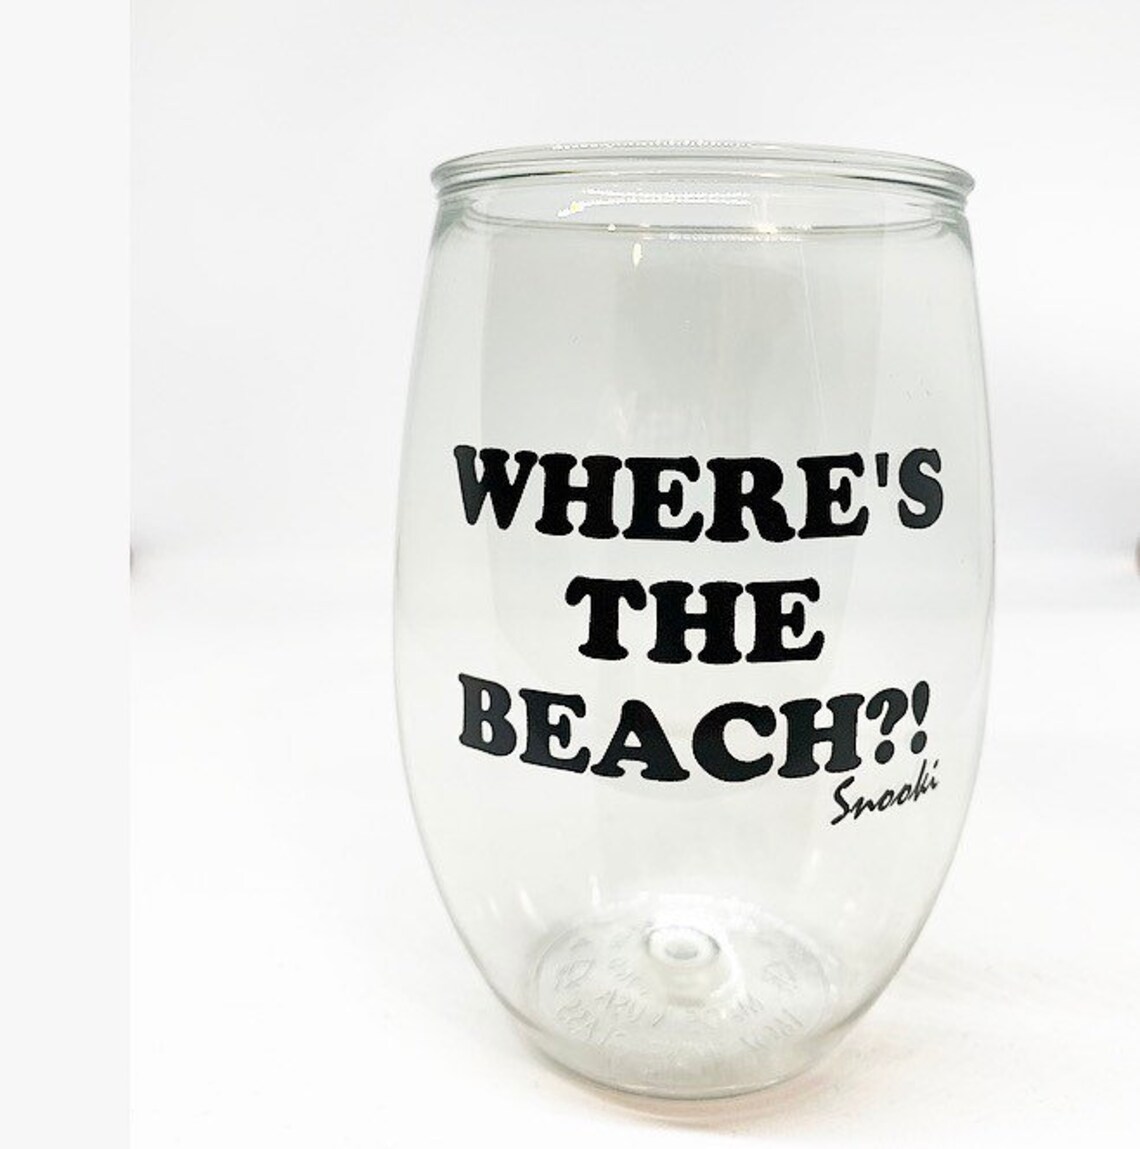 Snooki Wine Glass Jersey Shore Wine Glass Wheres the Beach | Etsy